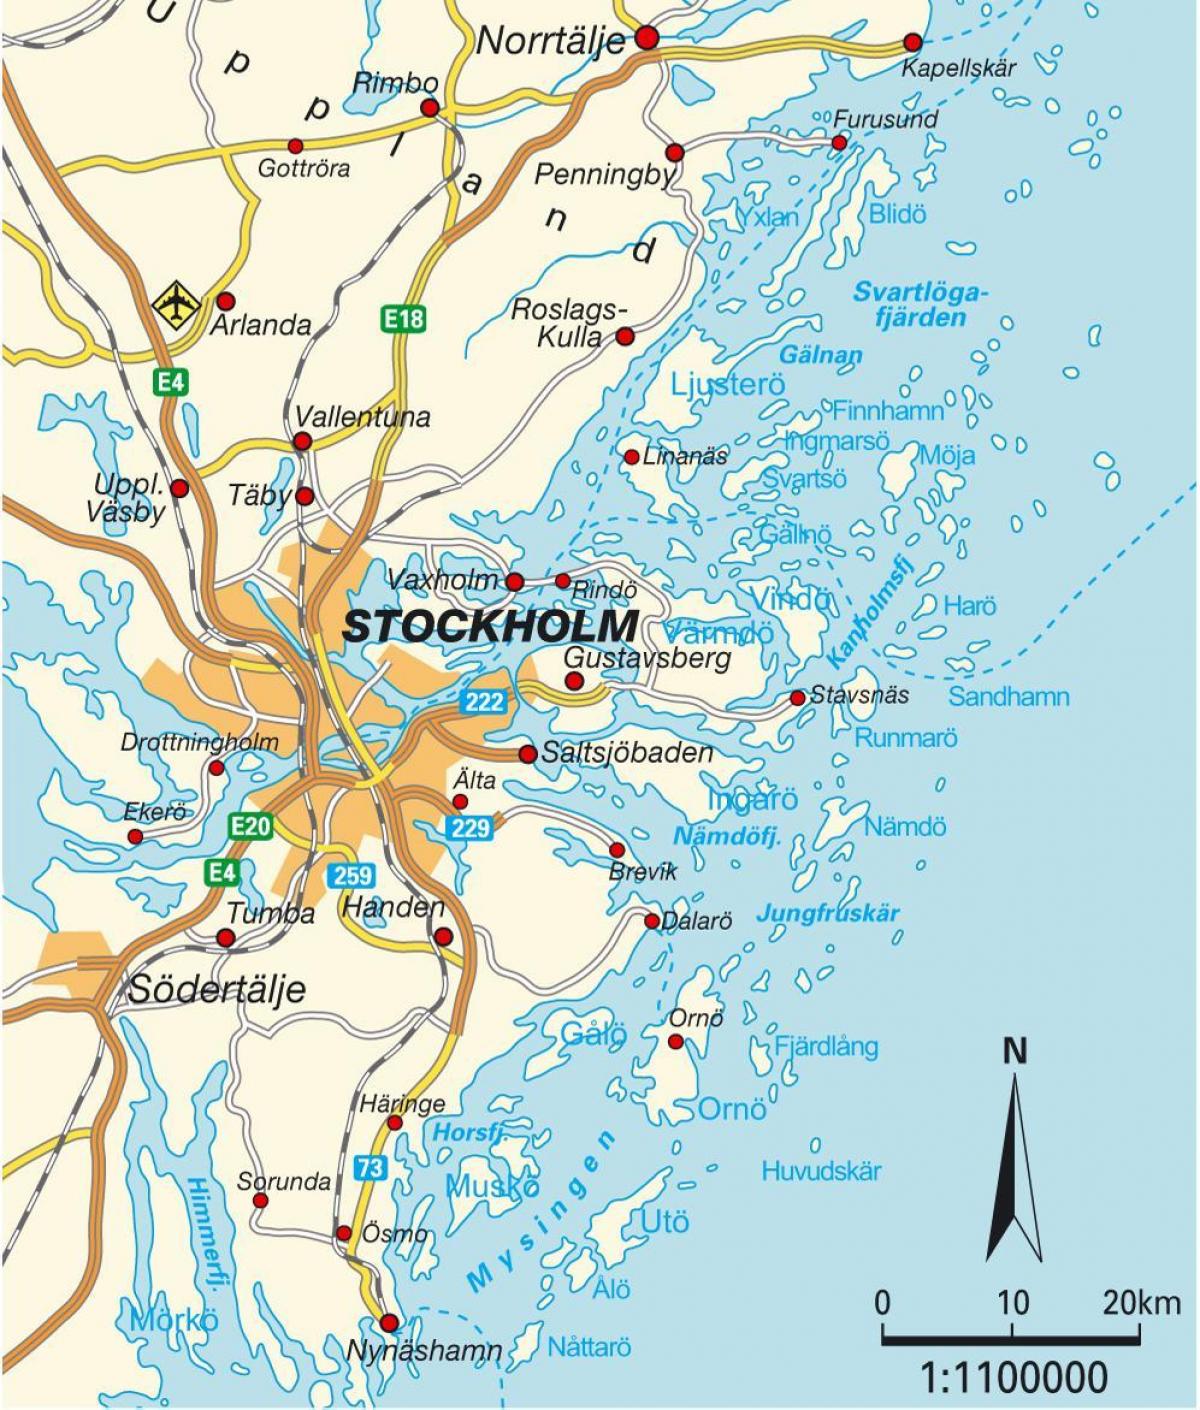 Stokholmas kartē